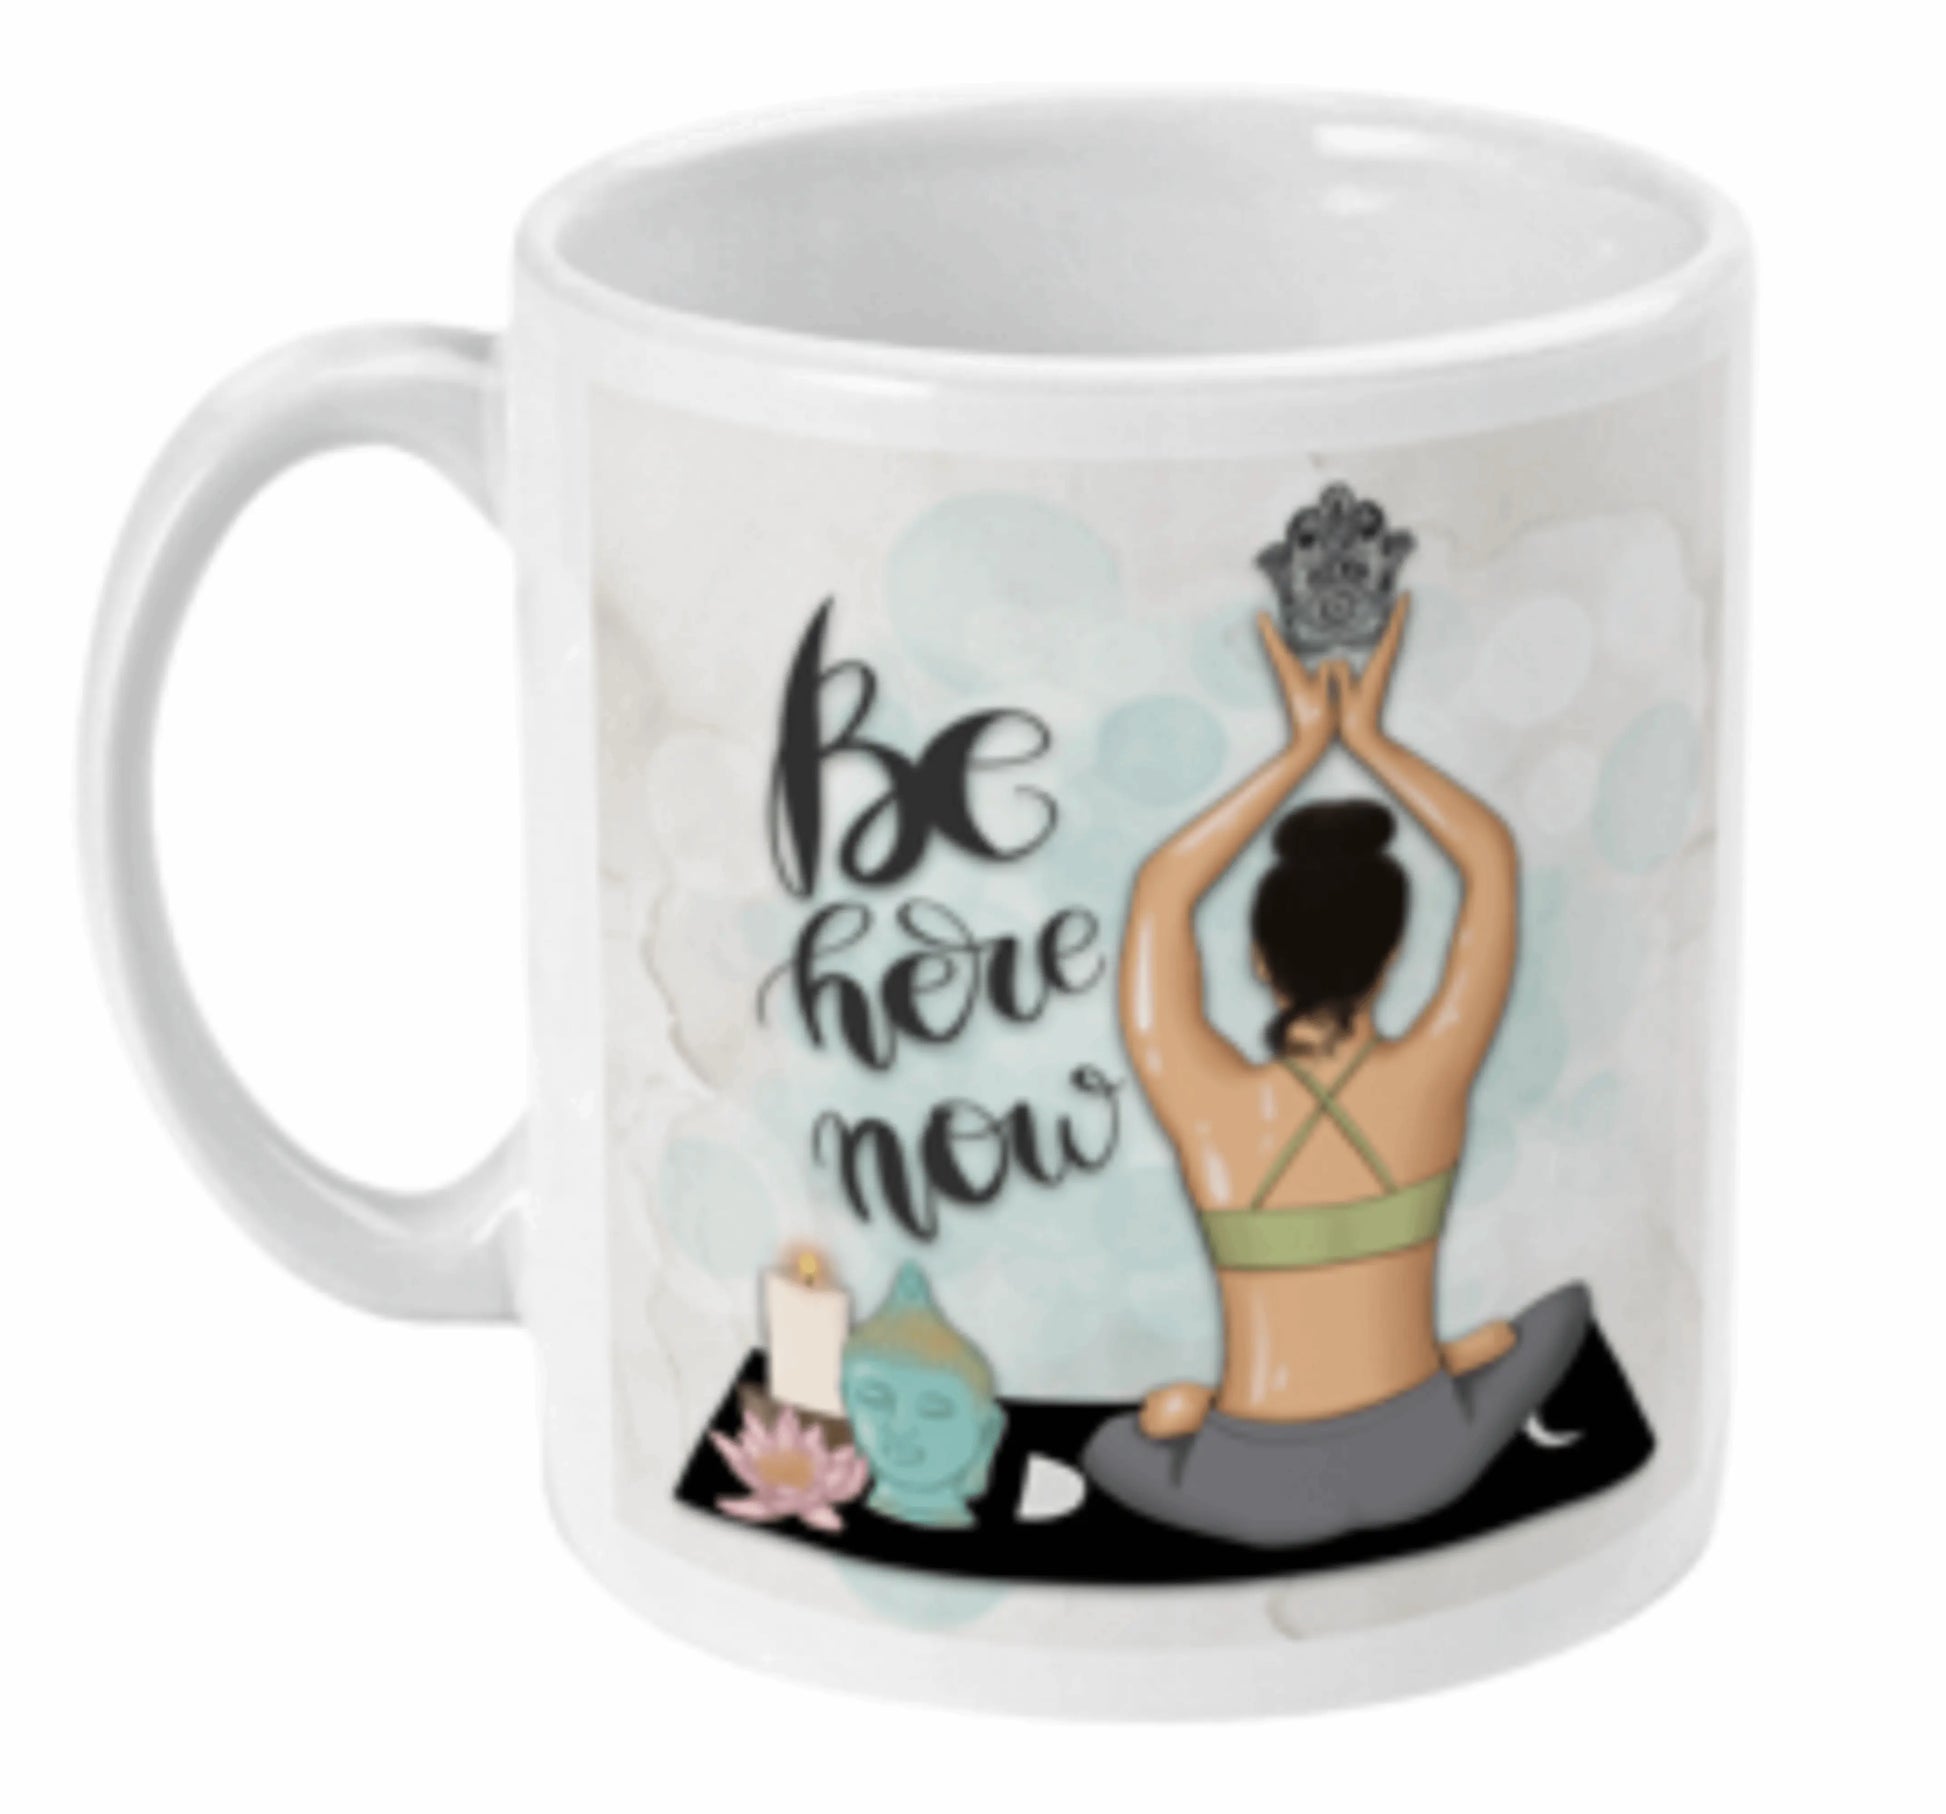  Be Here Now Yoga Coffee Mug by Free Spirit Accessories sold by Free Spirit Accessories